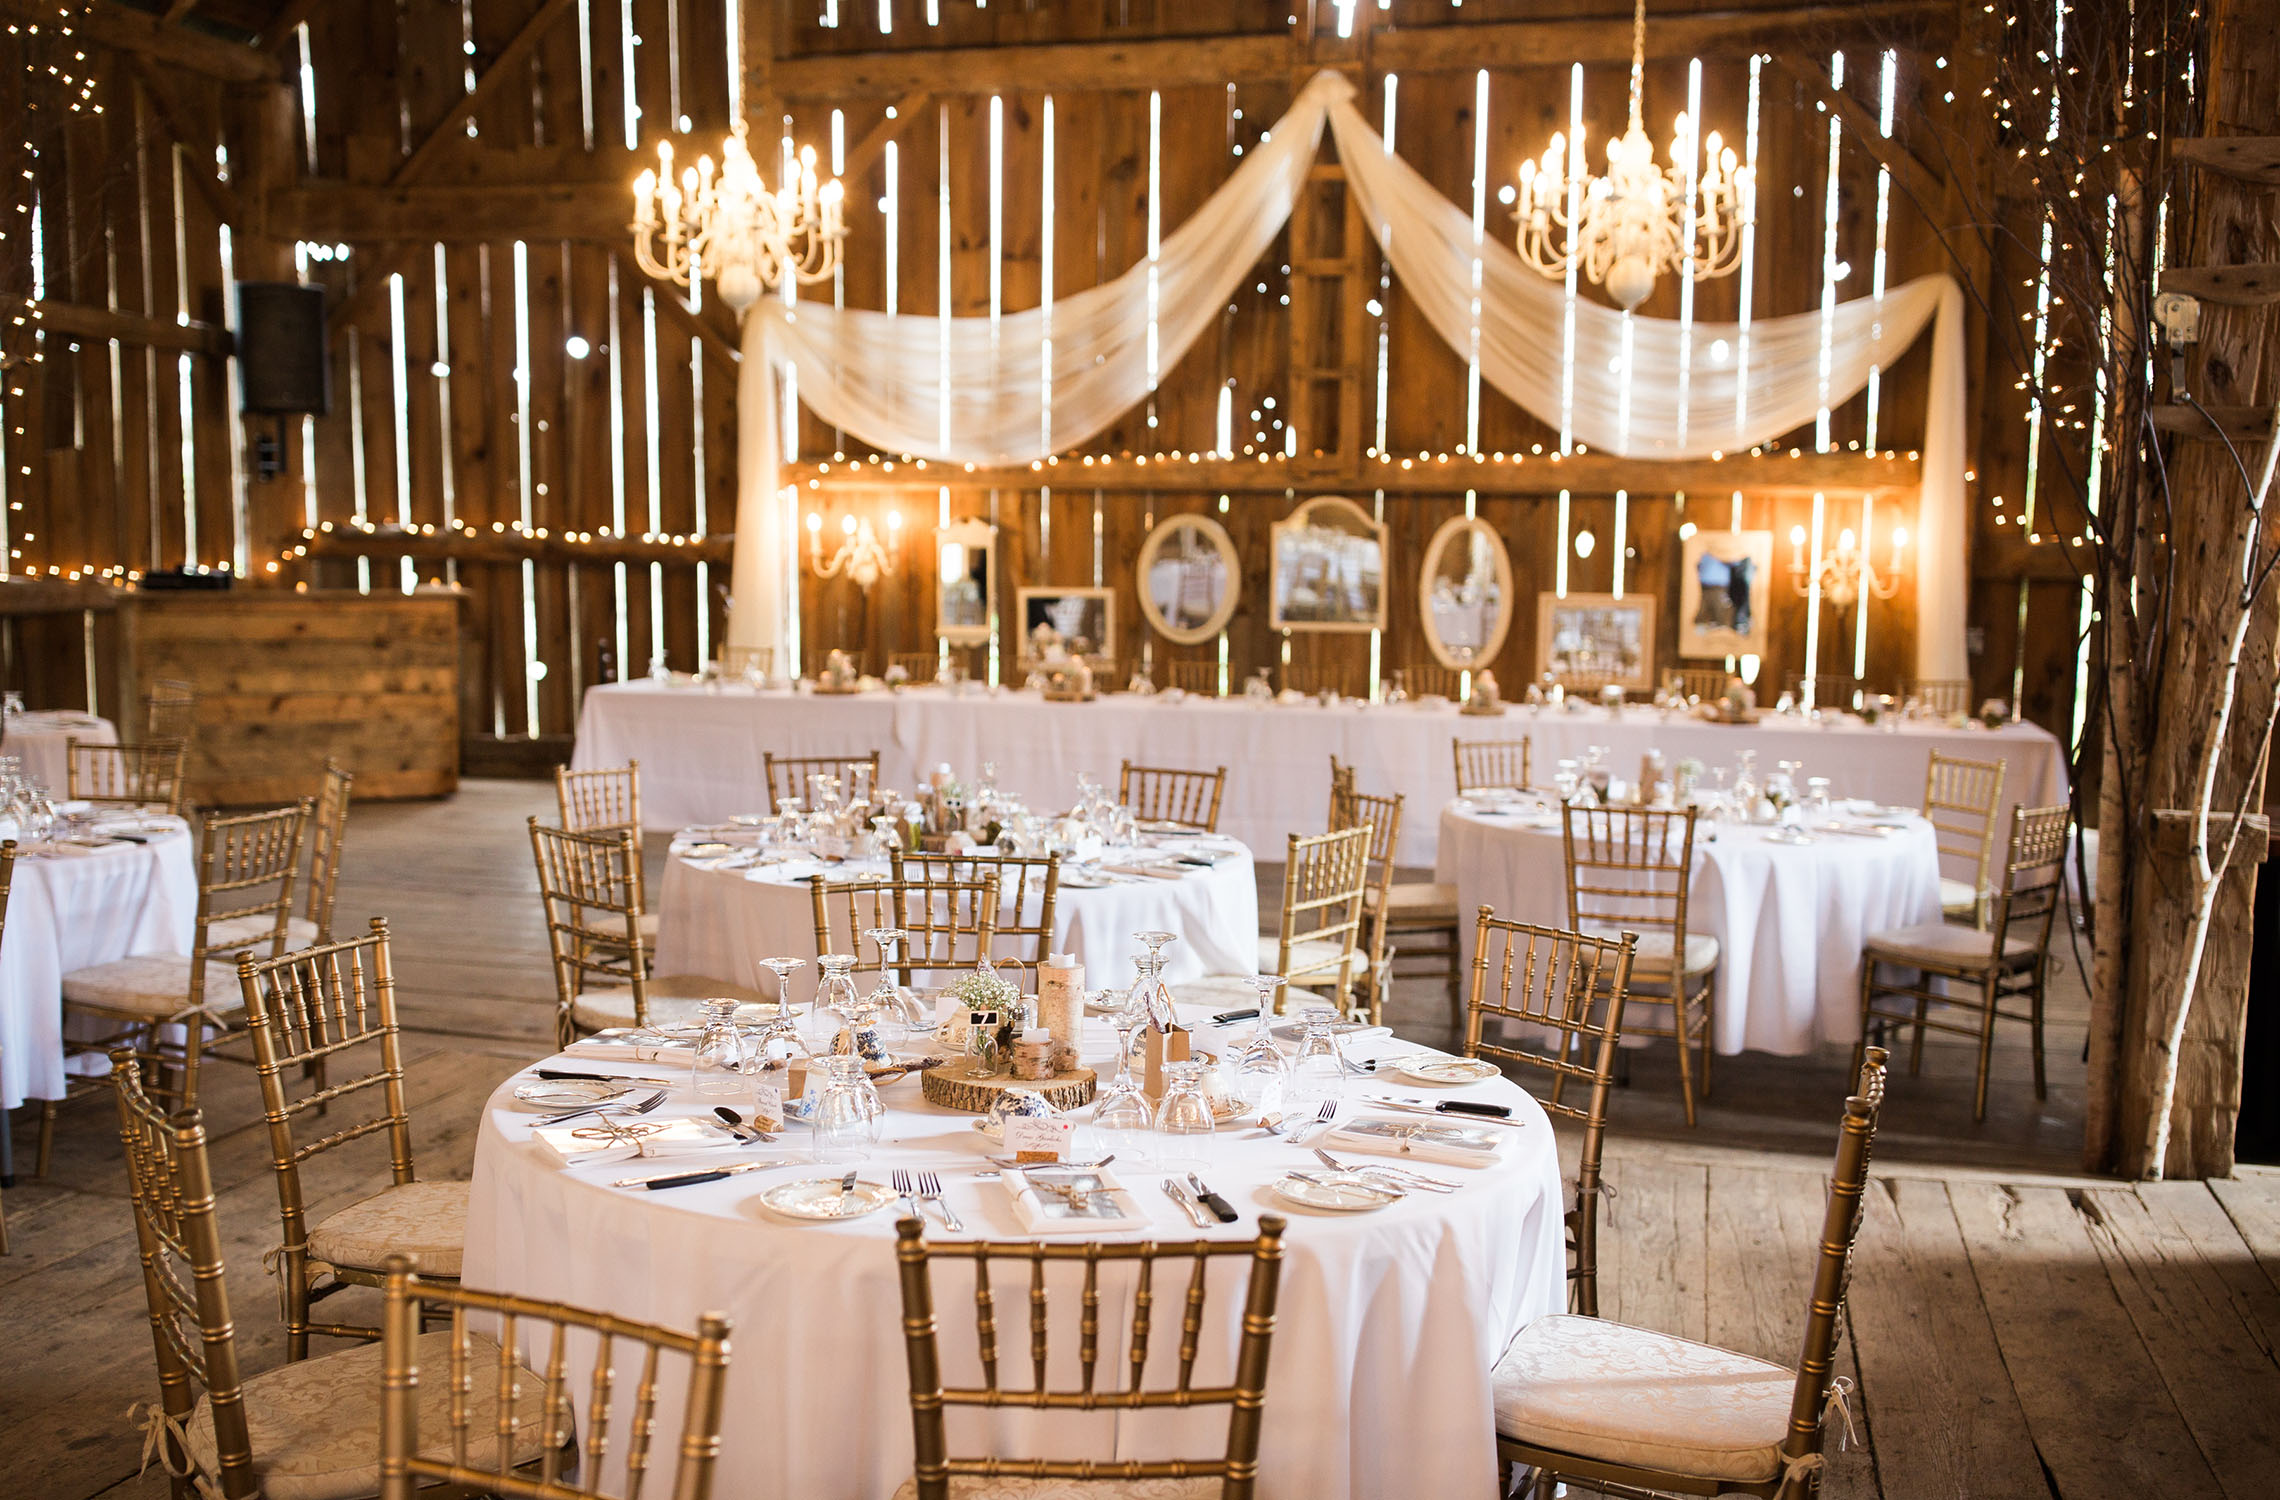 Dream decor at this Classic Century Barn Wedding